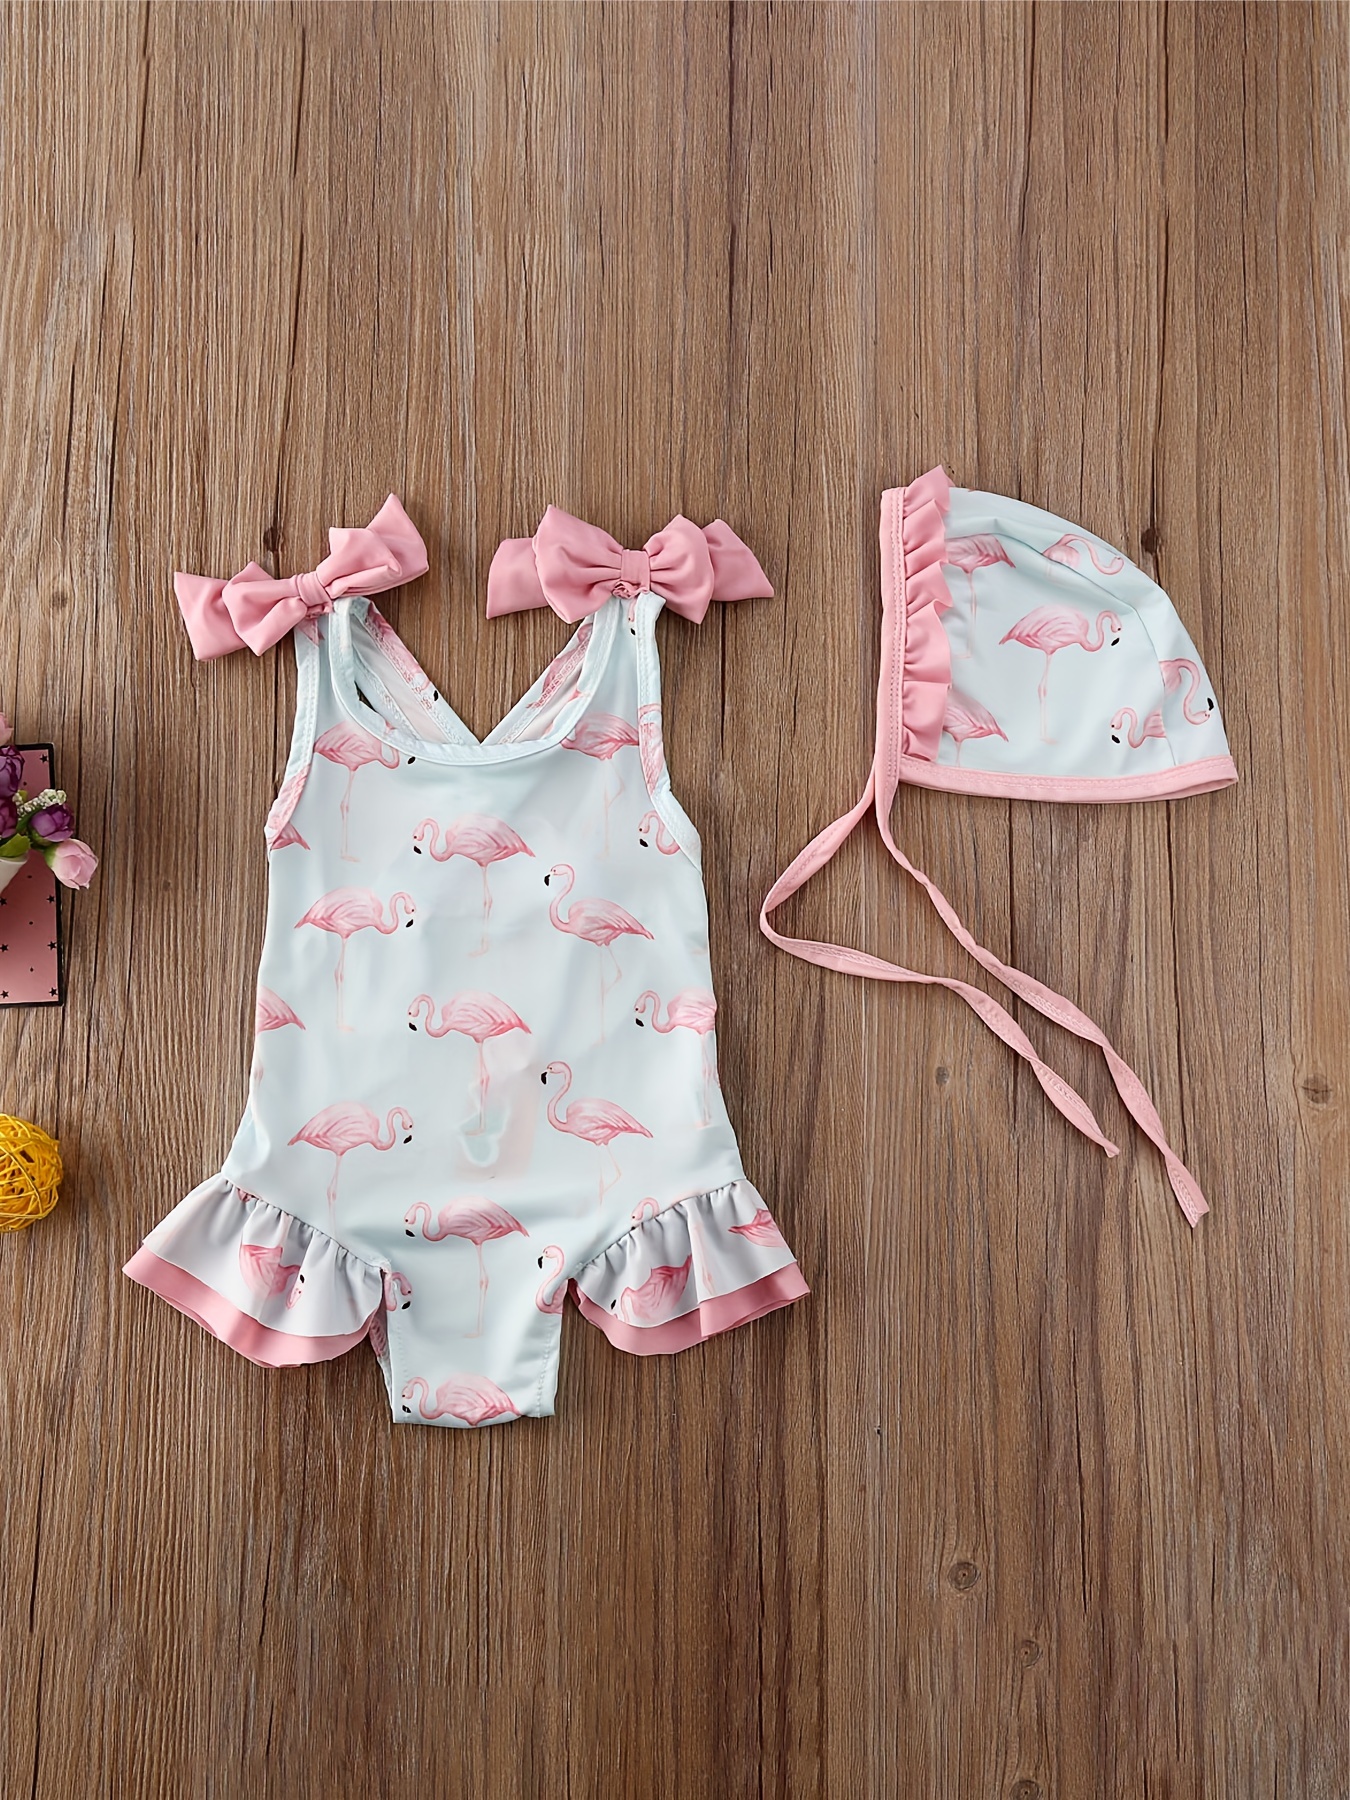 2pcs Toddler Baby Girl Flamingo Cotton Swimsuit Ruffle Bathing Suits & Hats